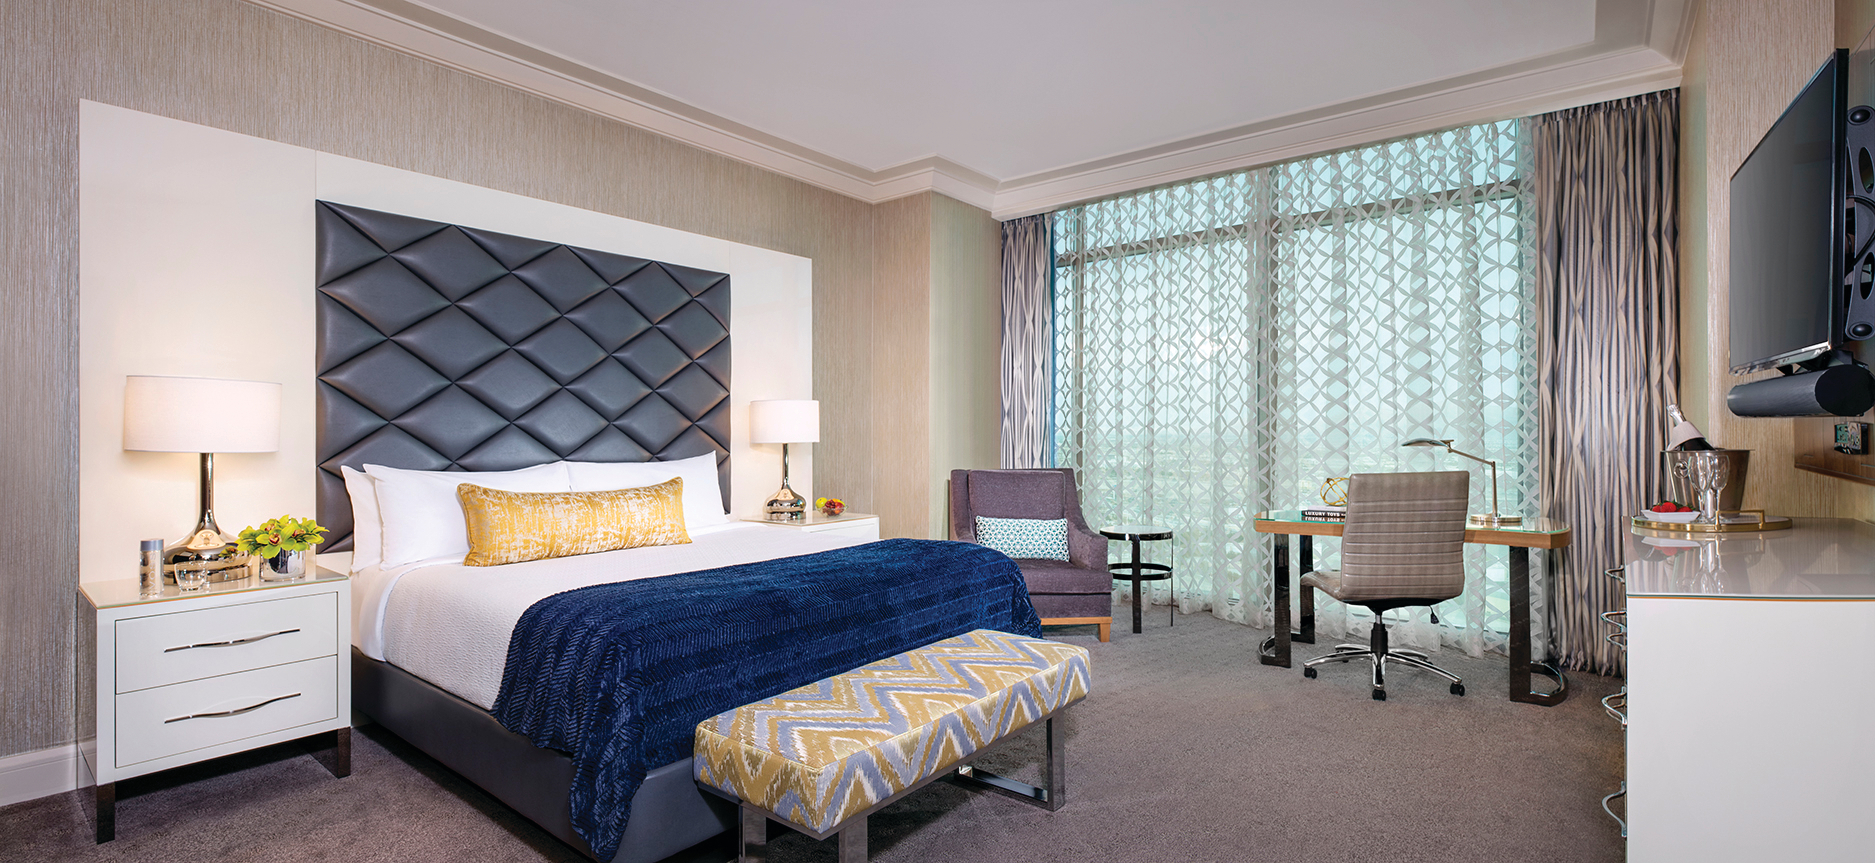 Mandalay Bay Las Vegas - Resort King Room 